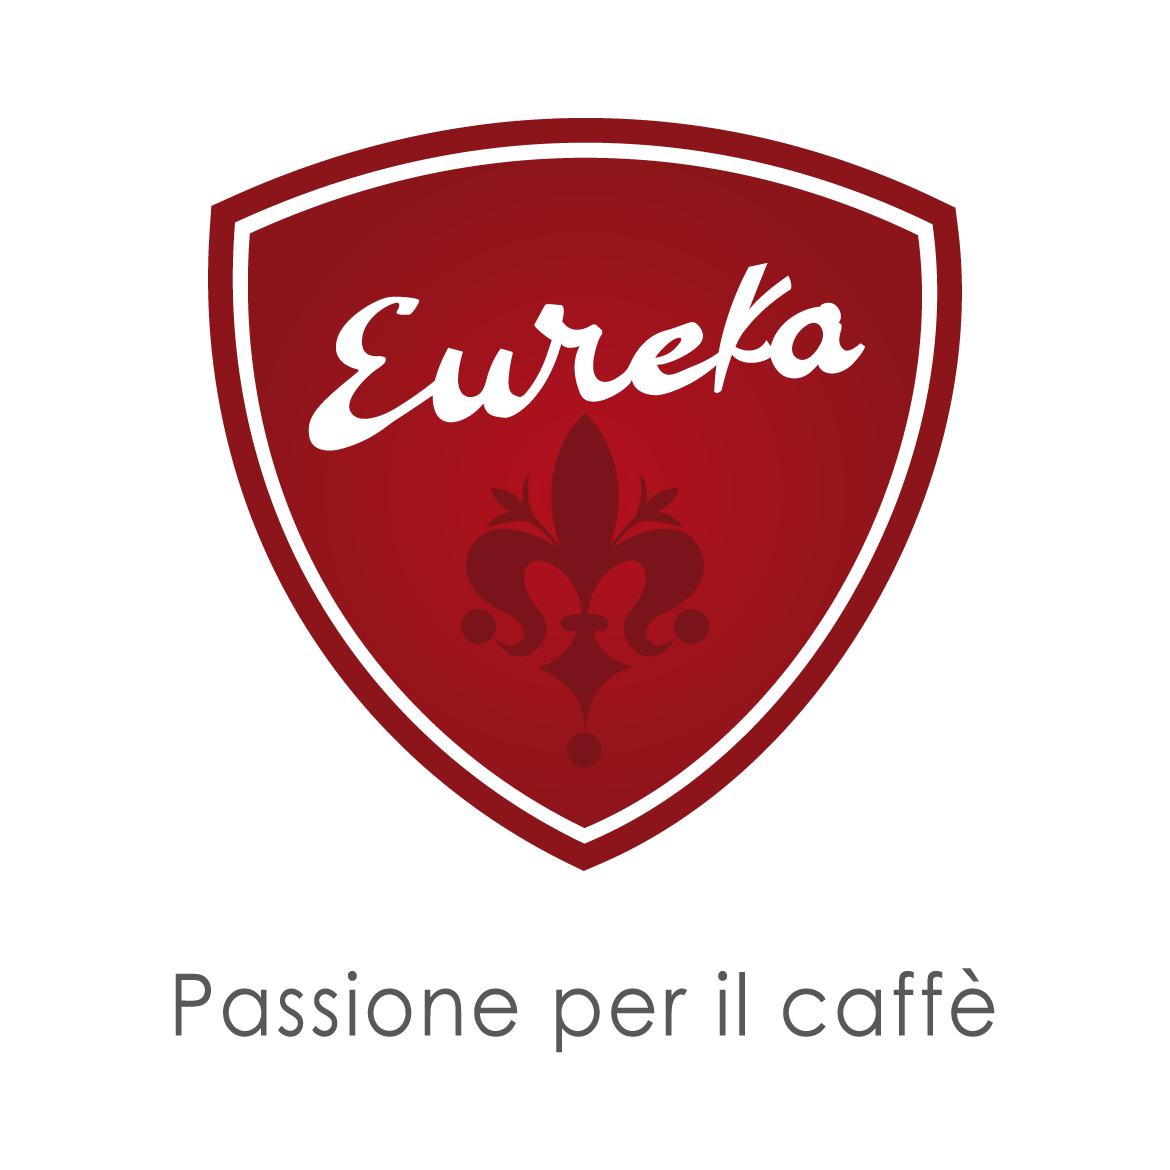 eureka coffee